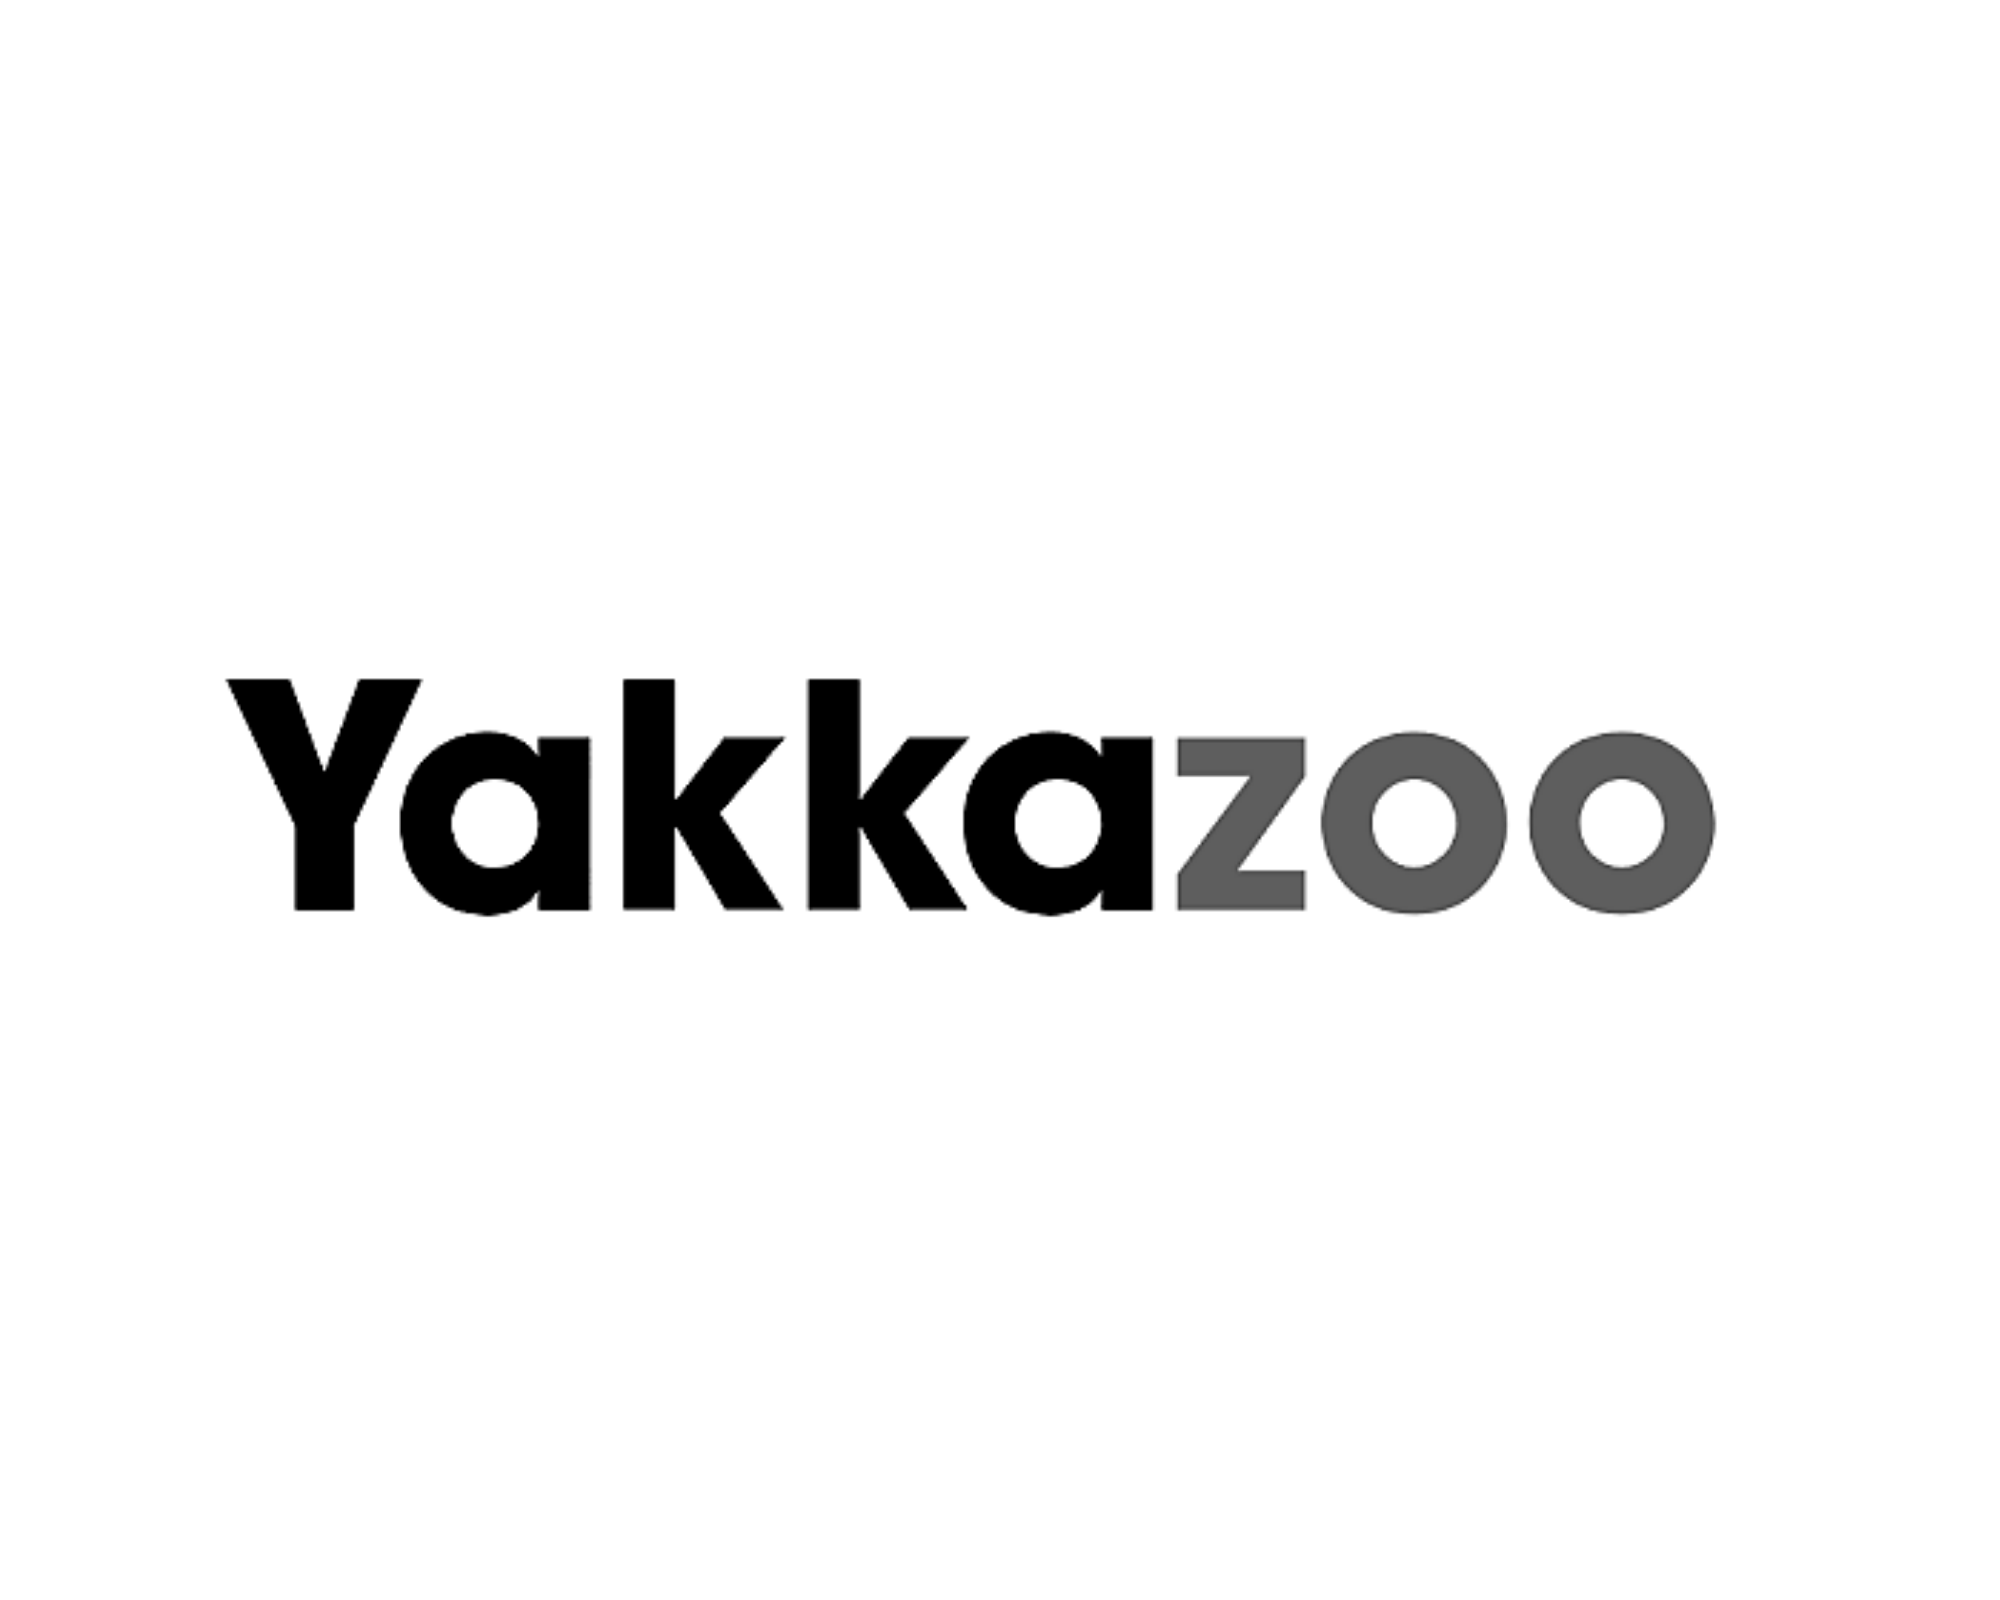 Yakkazoo logo